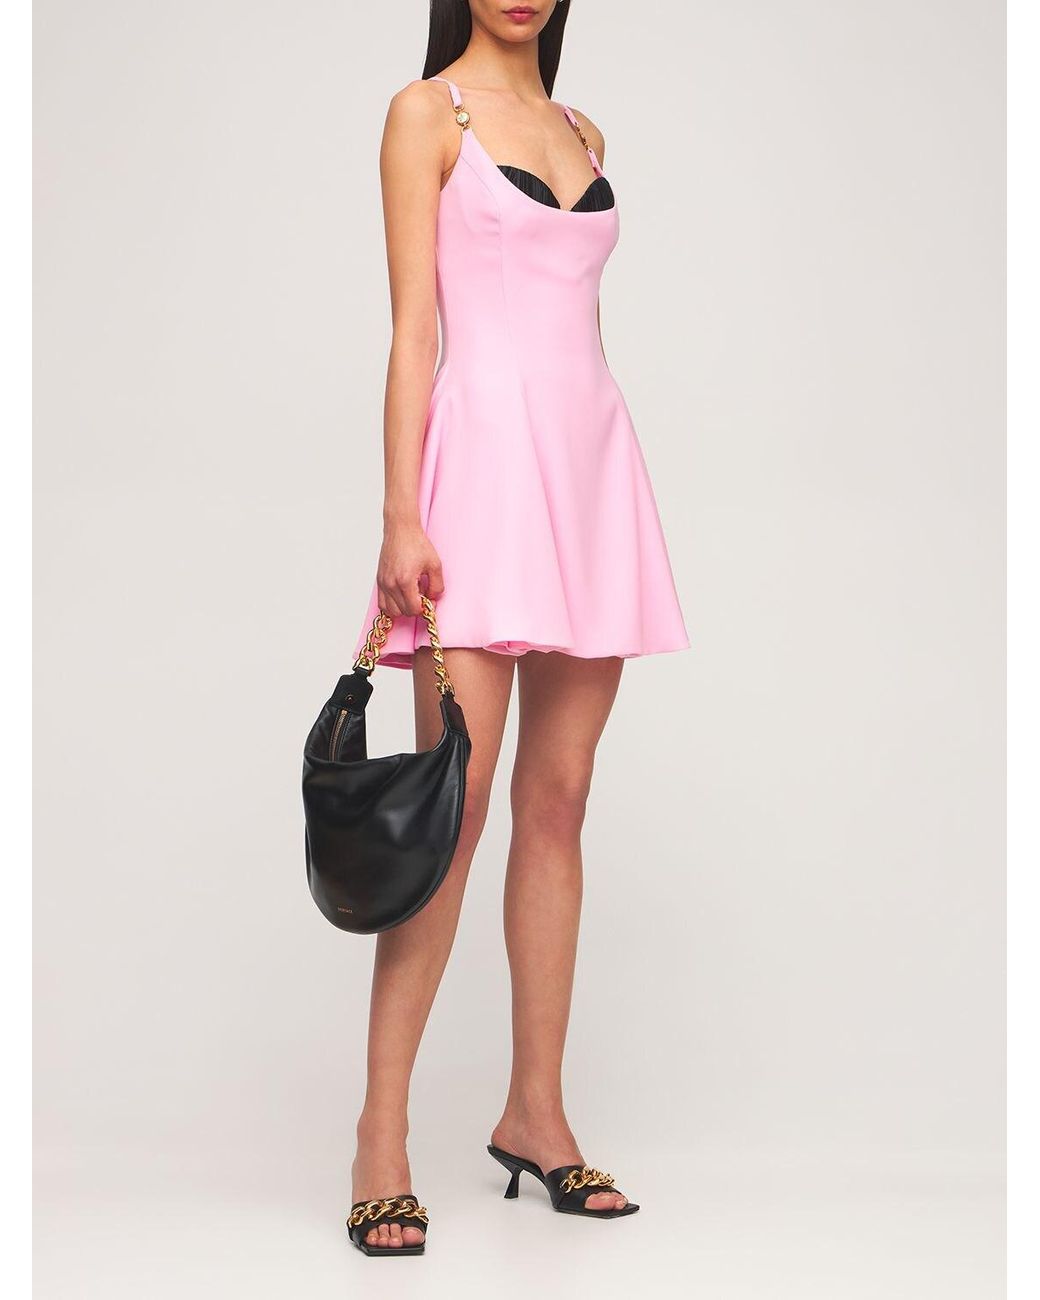 Versace Sleeveless Cady Mini Dress in Pink | Lyst Australia